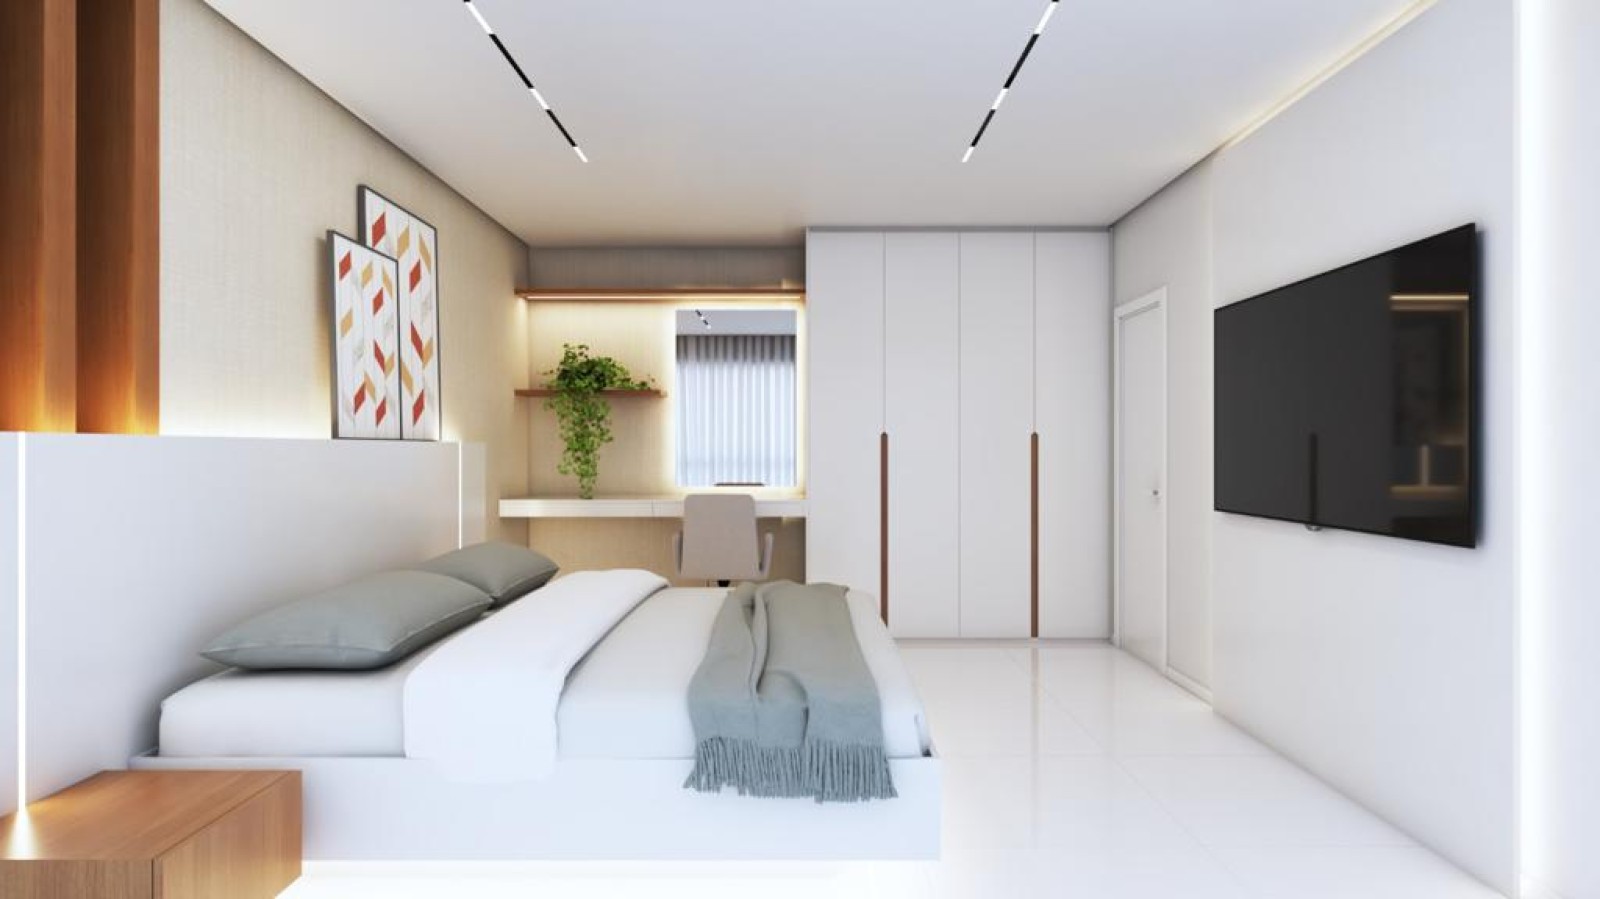 3 Bedroom Luxury House, for sale, in Portimão, Algarve_224895